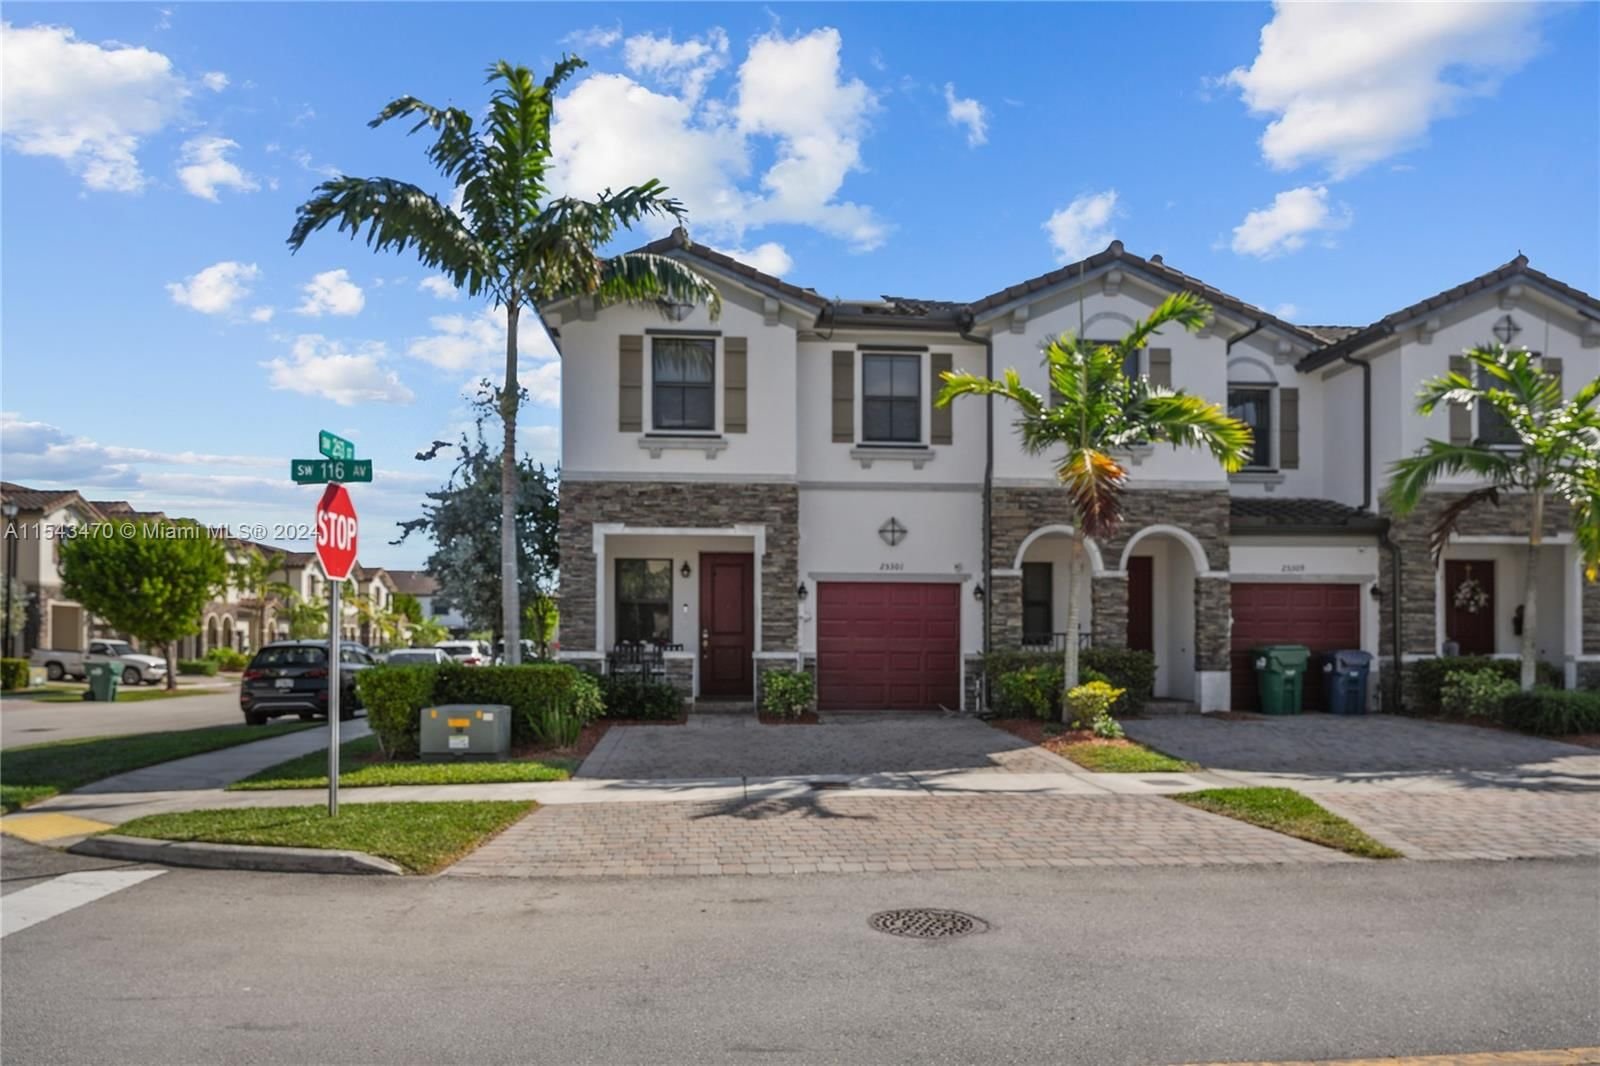 Real estate property located at 25301 SW 116TH AVE, Miami-Dade County, COCO PALM ESTATES, Homestead, FL